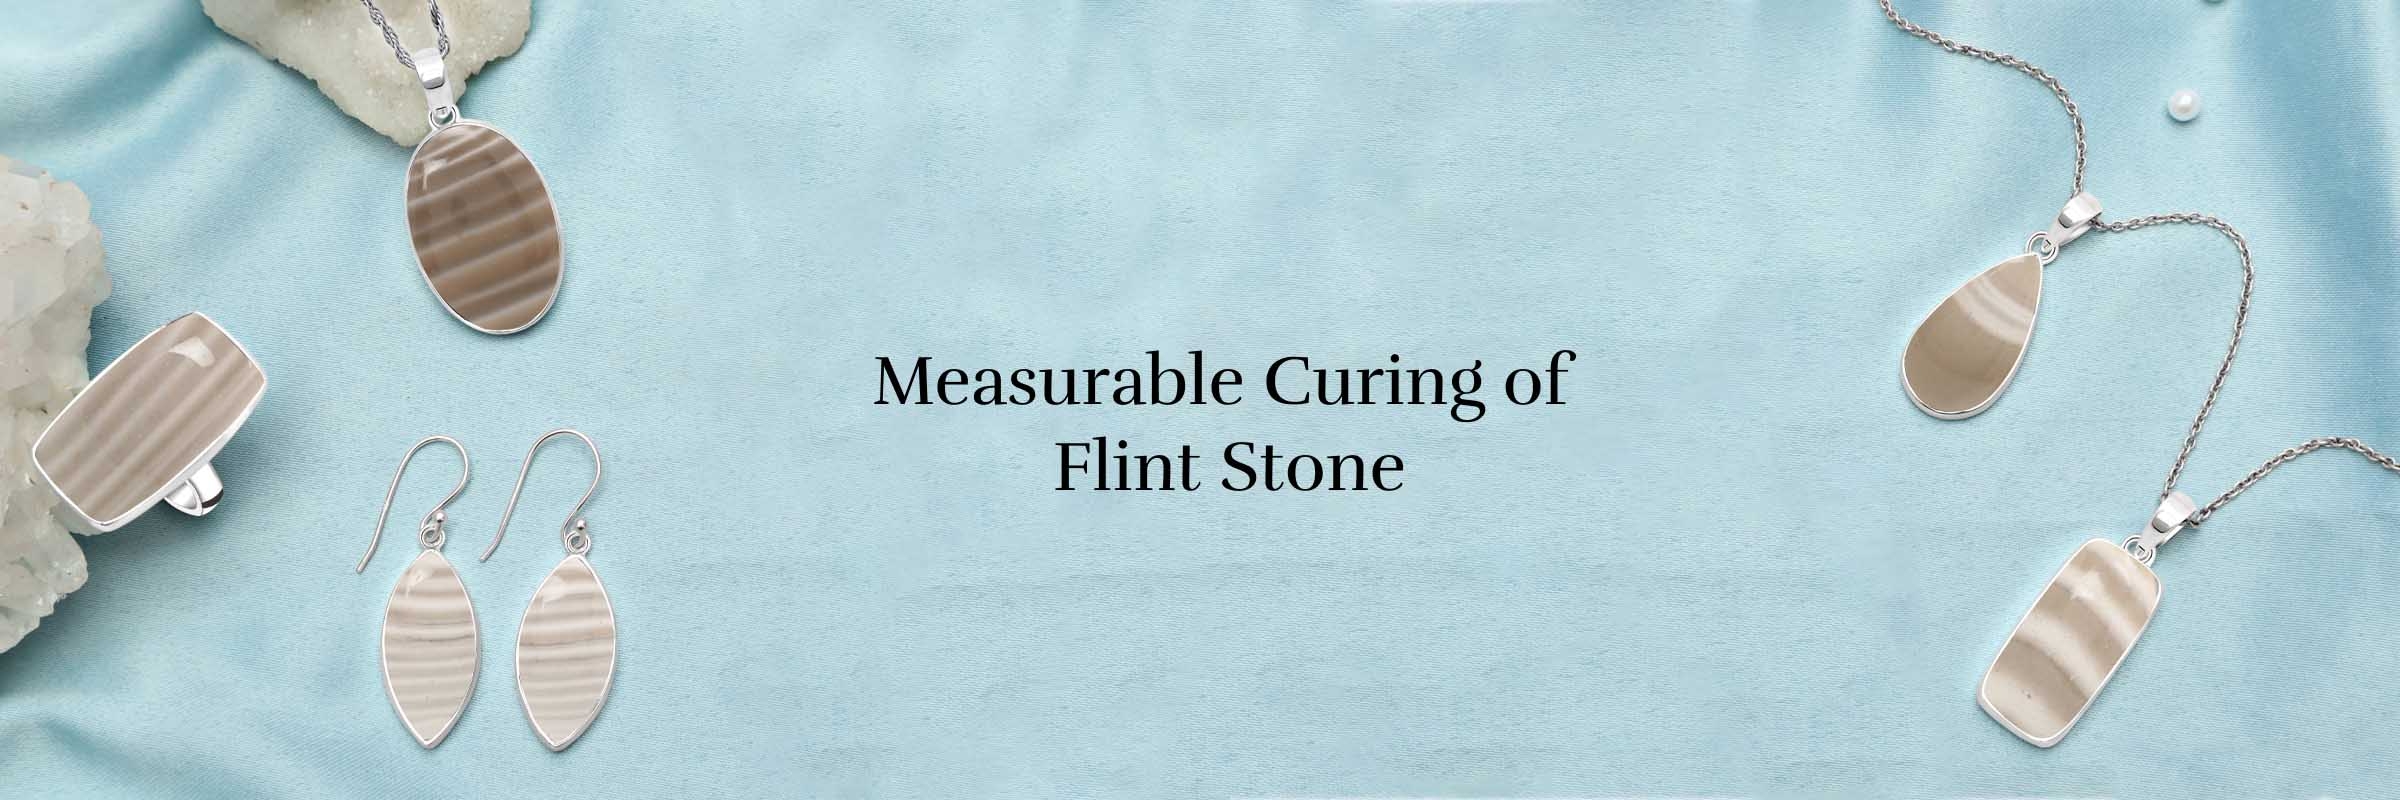 Flint Healing Properties